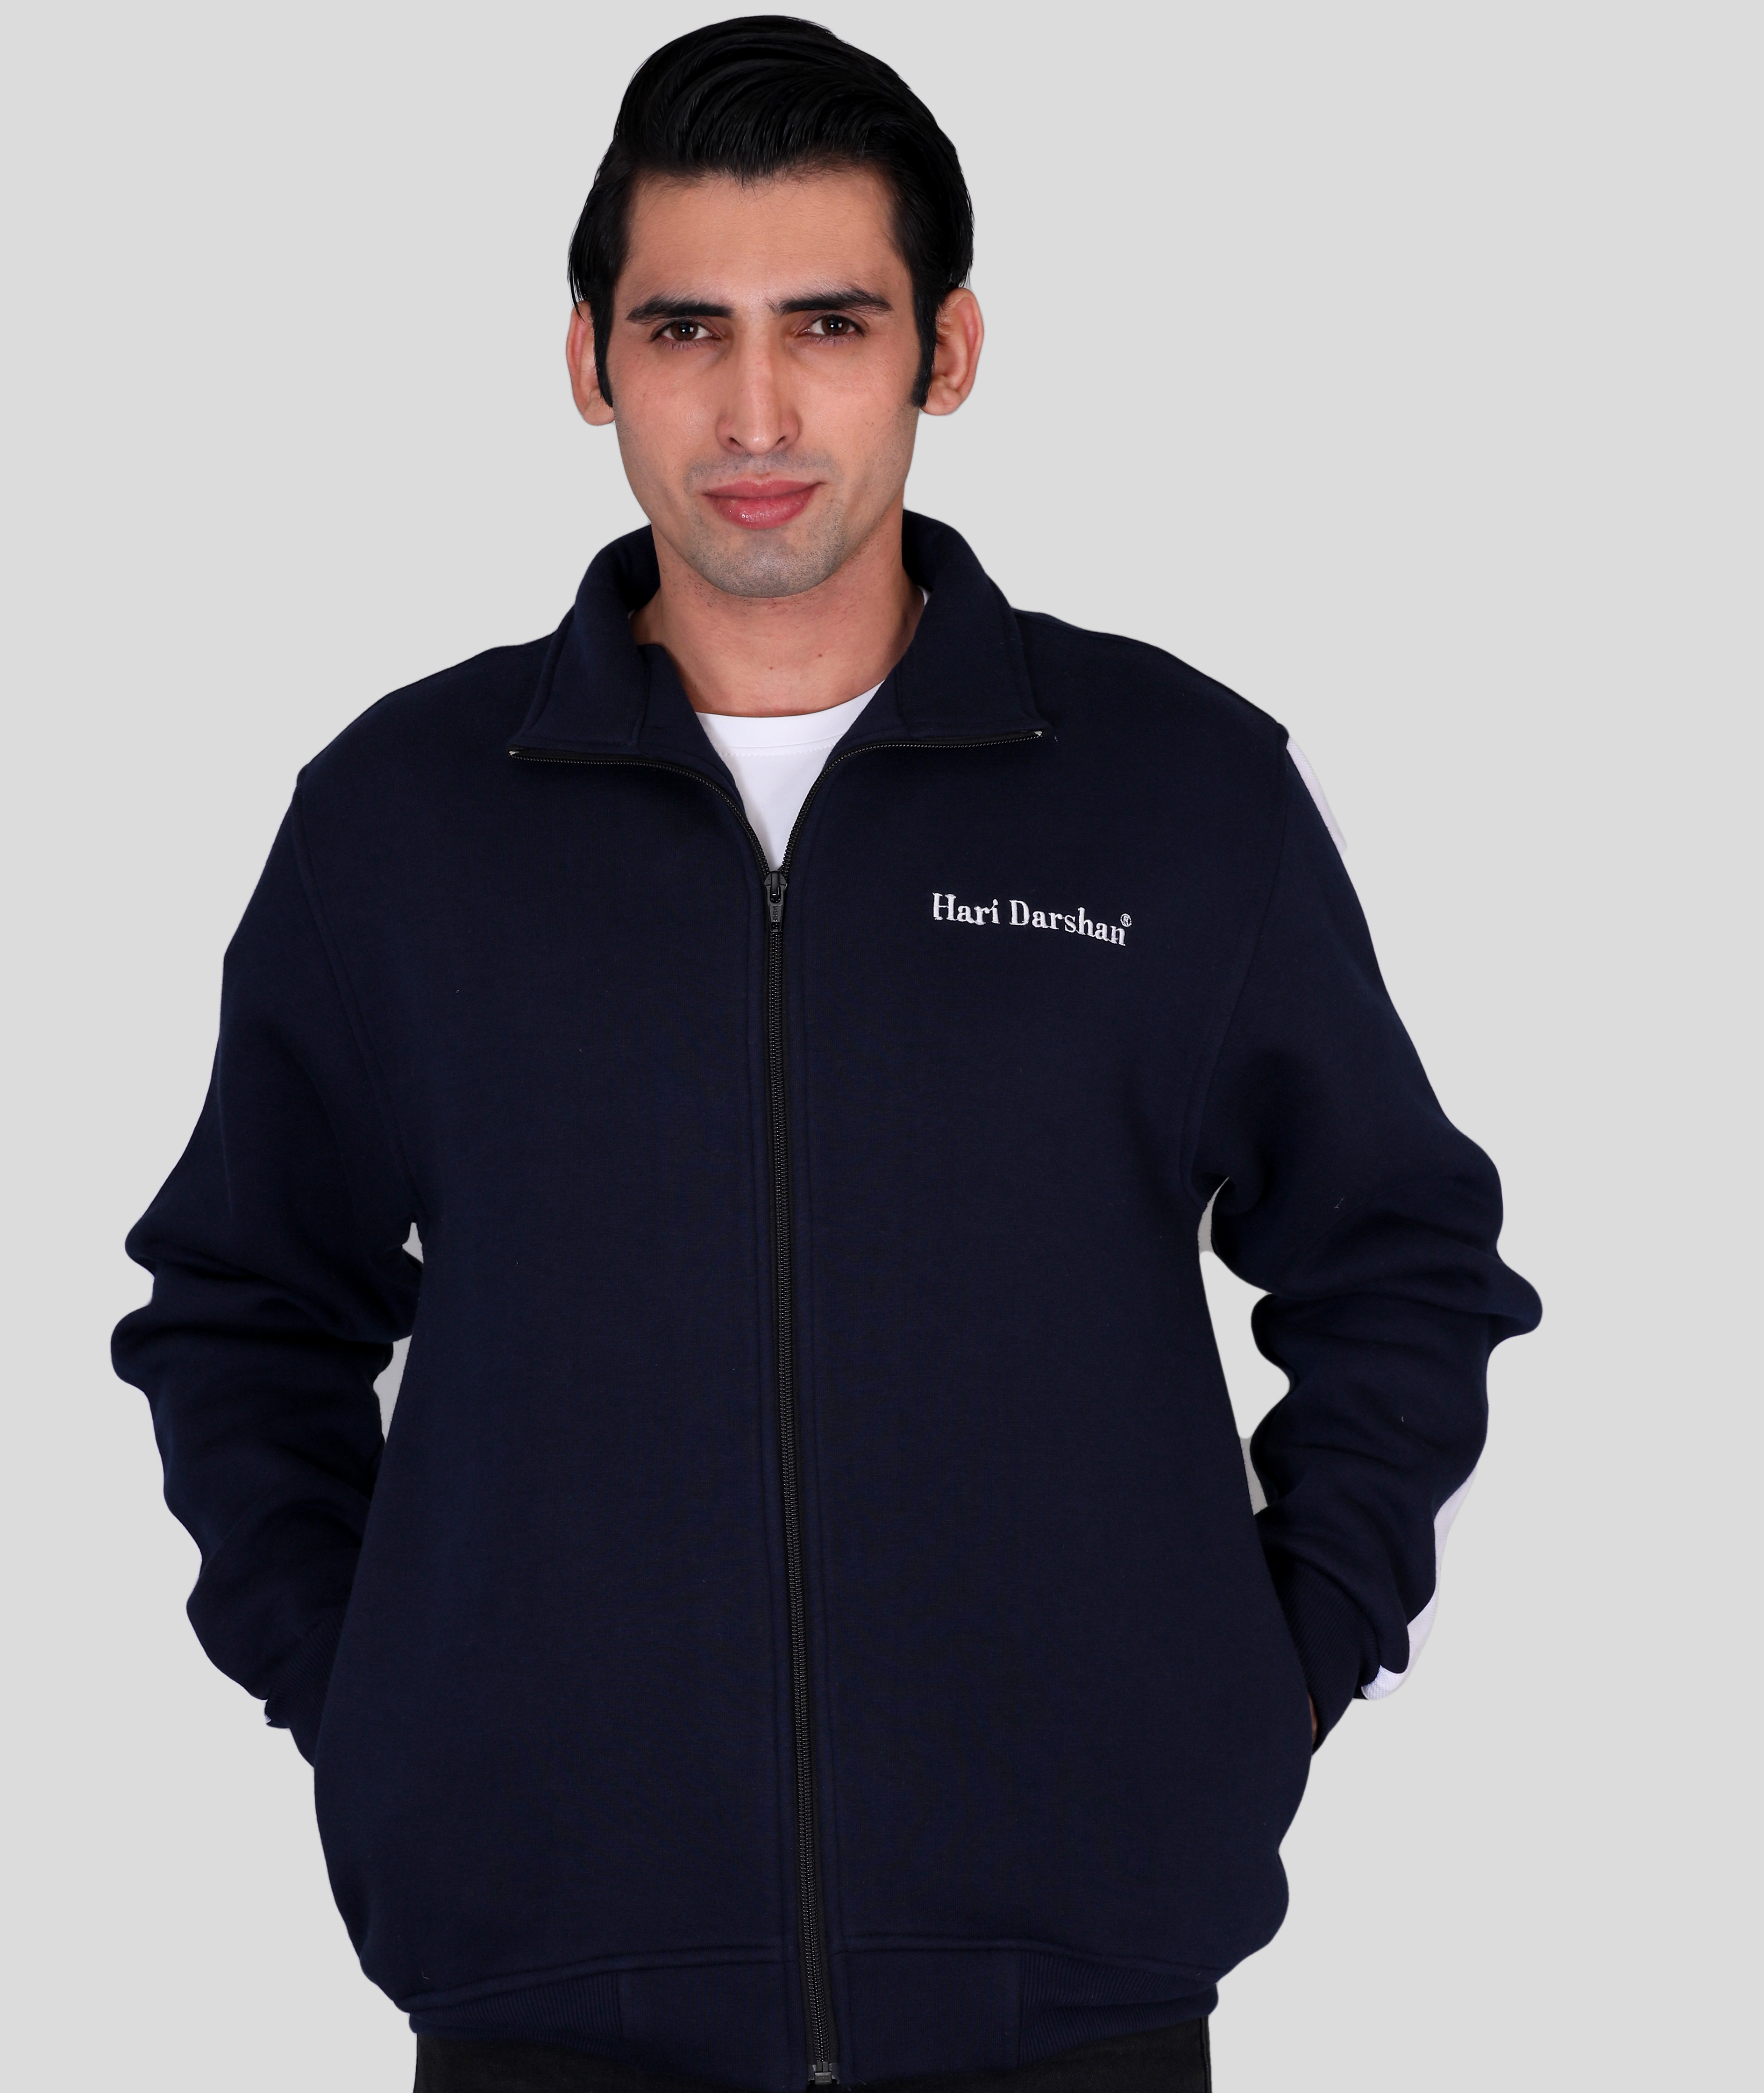 Customize sweatshirts manufacturer in delhi